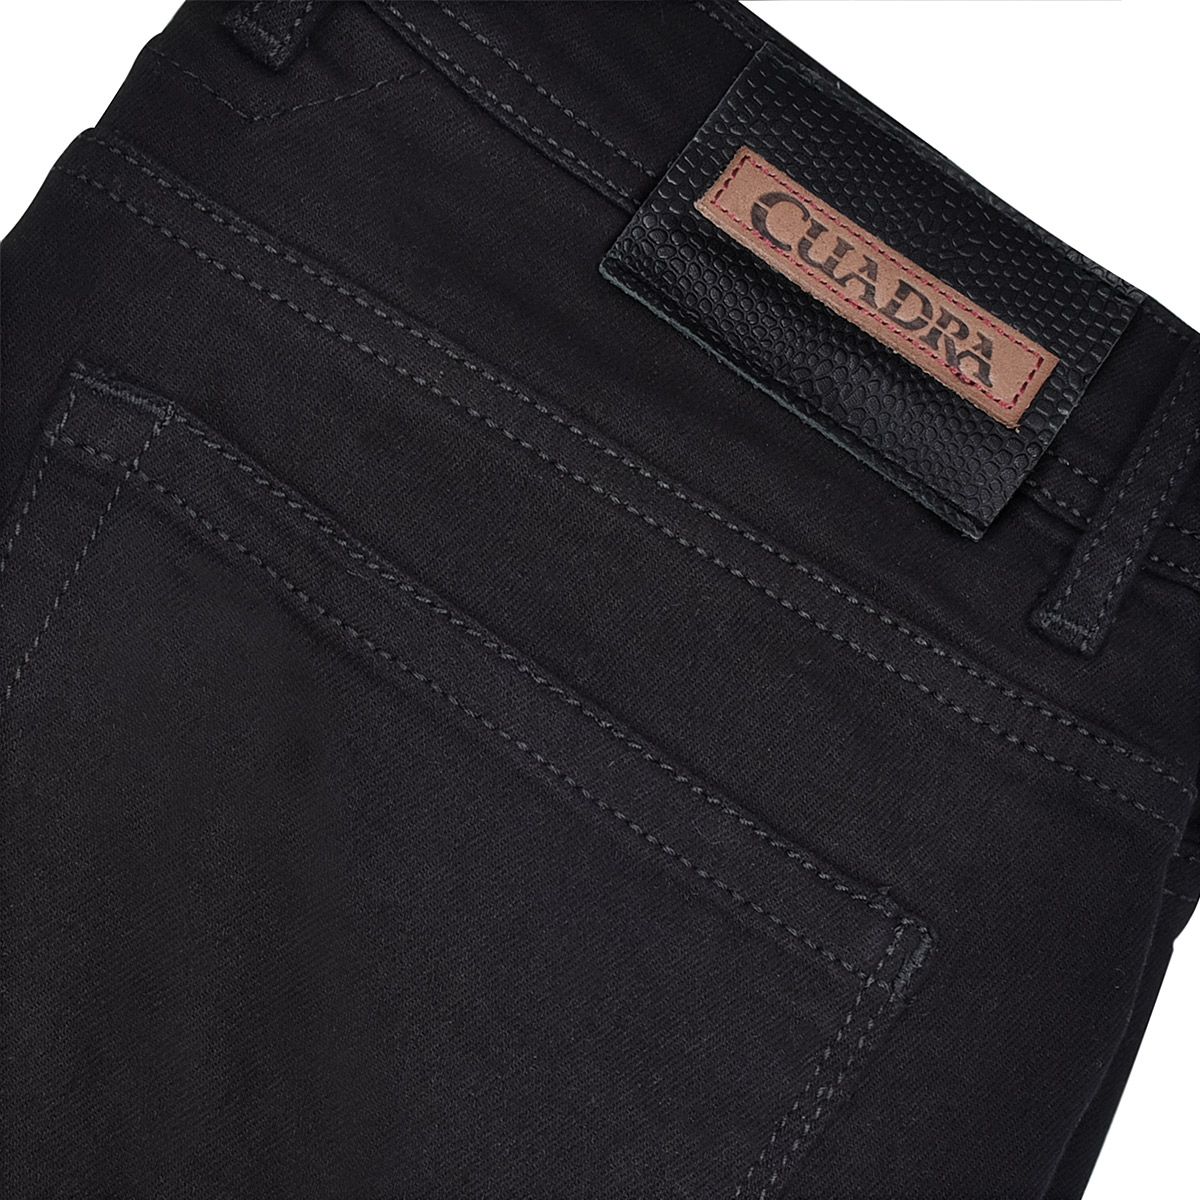 JN0LP20 - Cuadra denim black ultimate comfort stretch denim jeans for men-Kuet.us